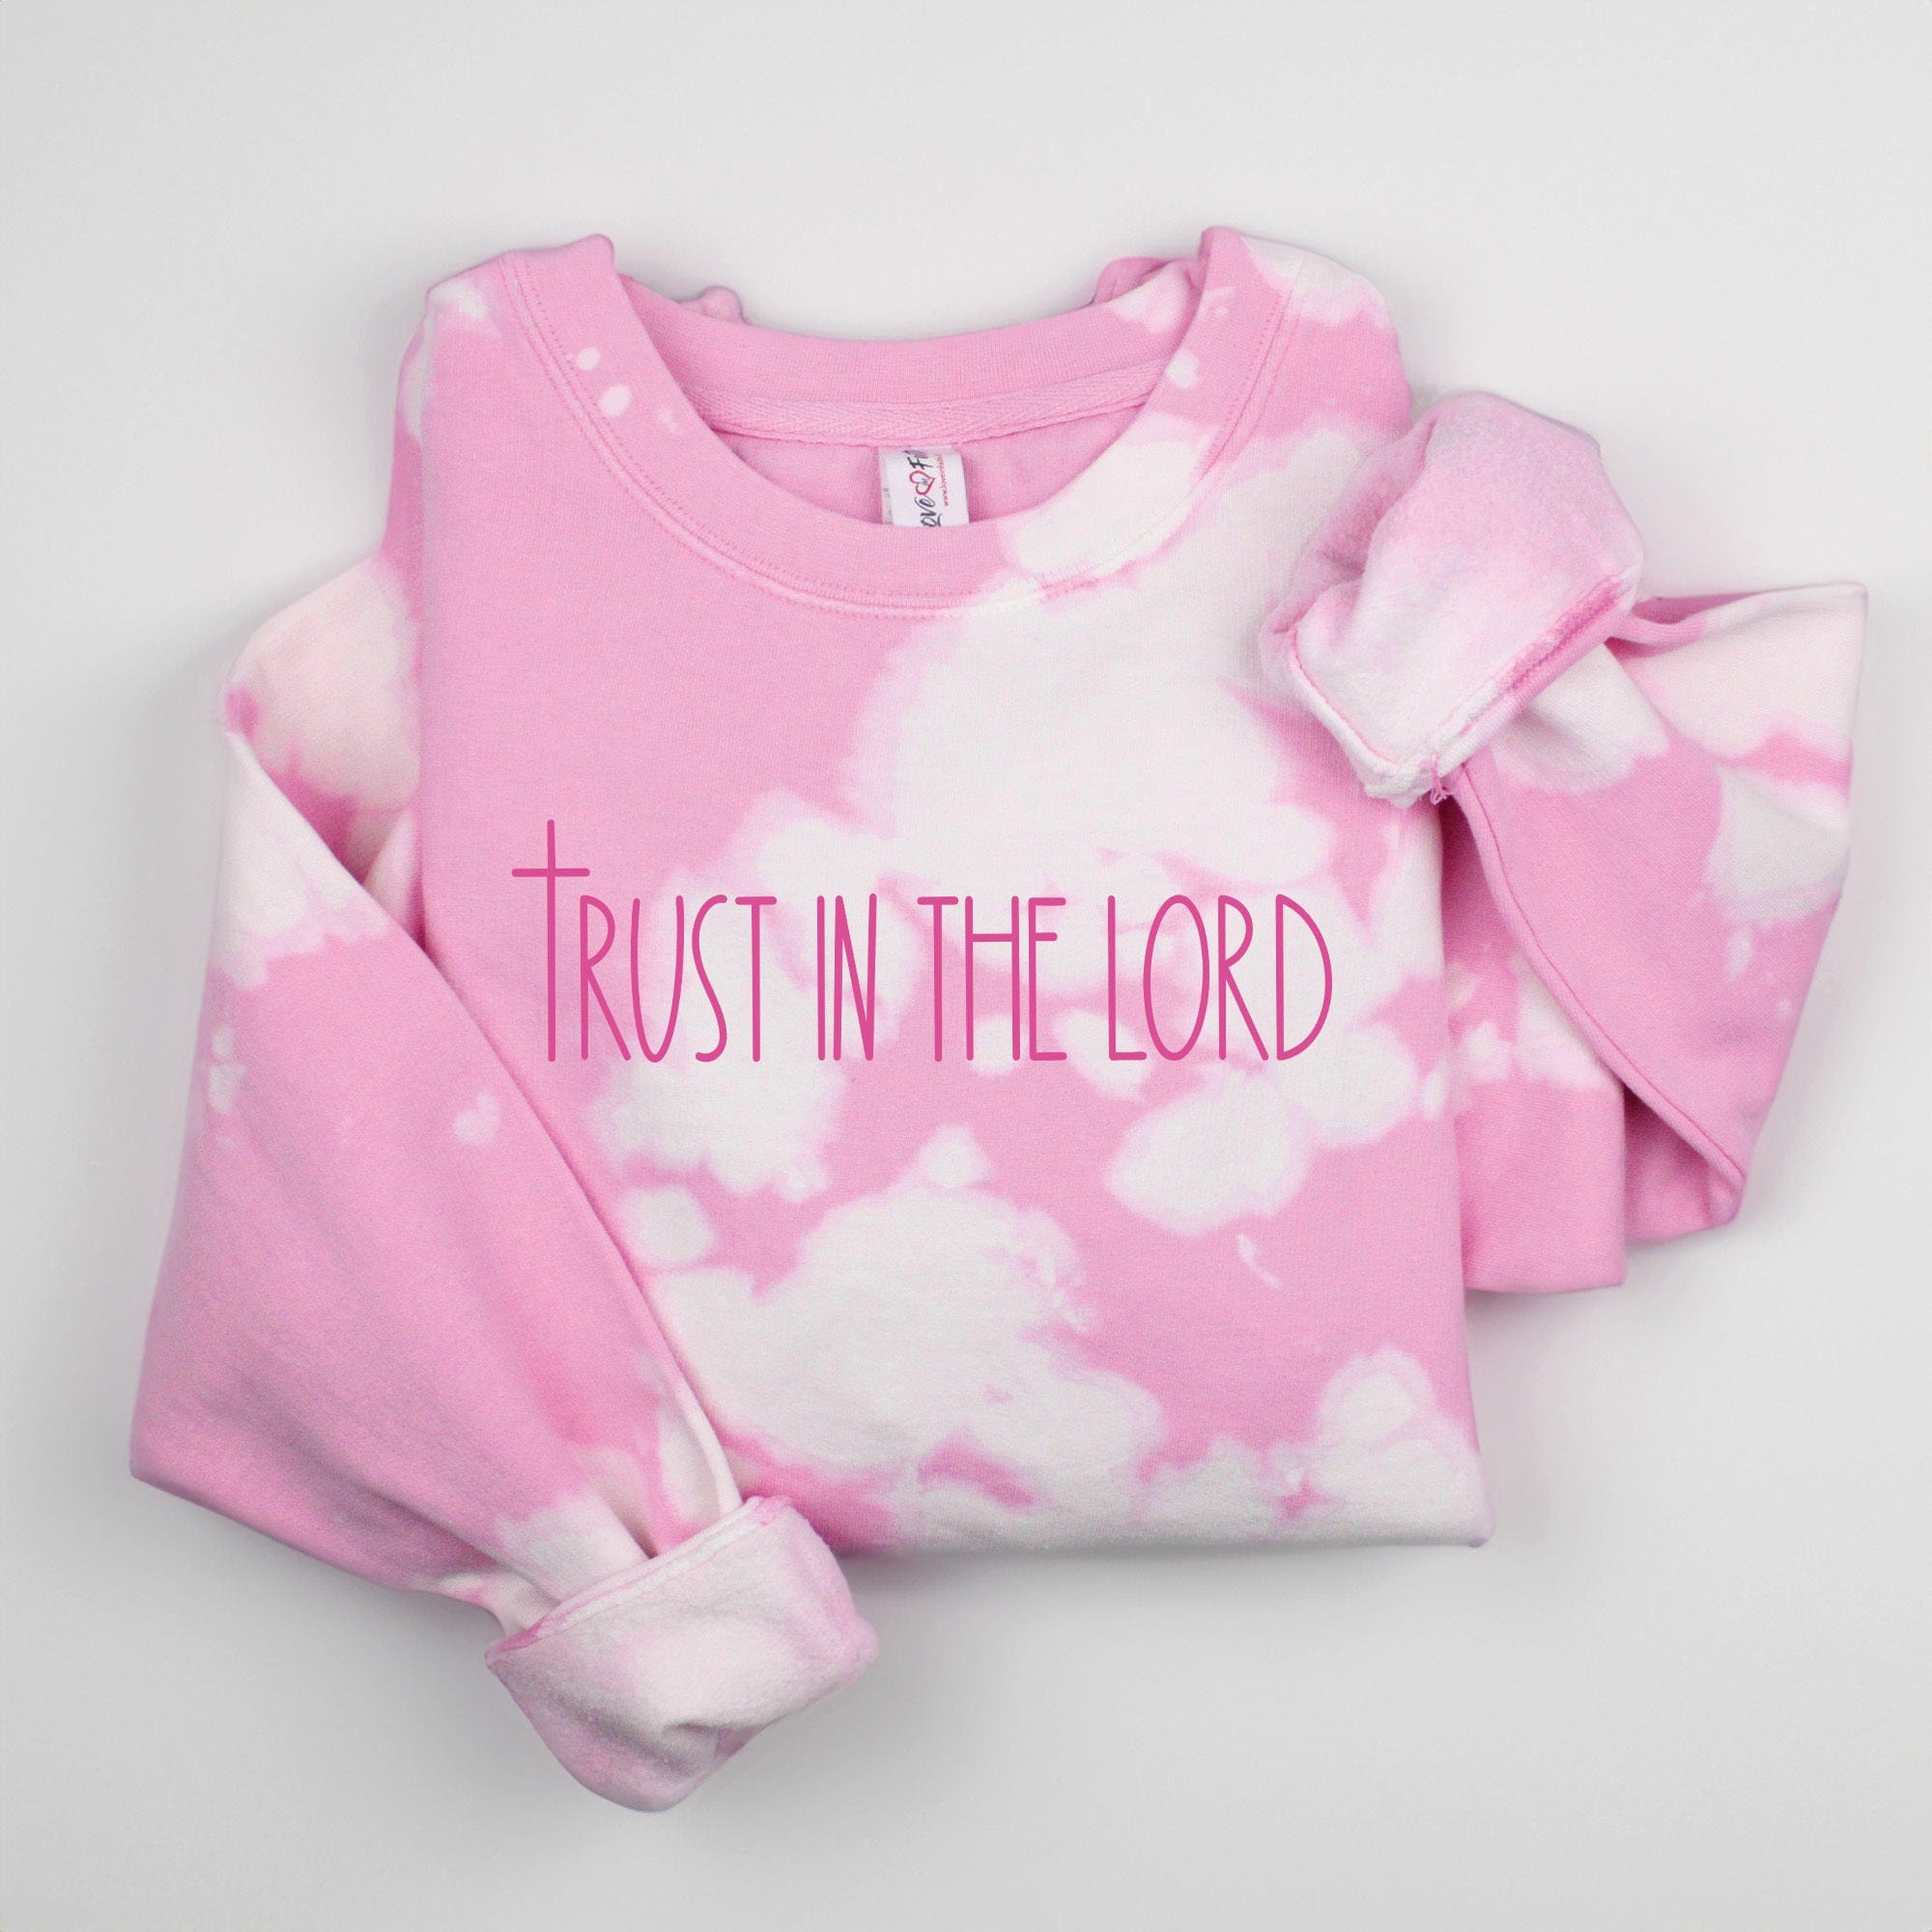 Trust in the Lord Sweatshirt